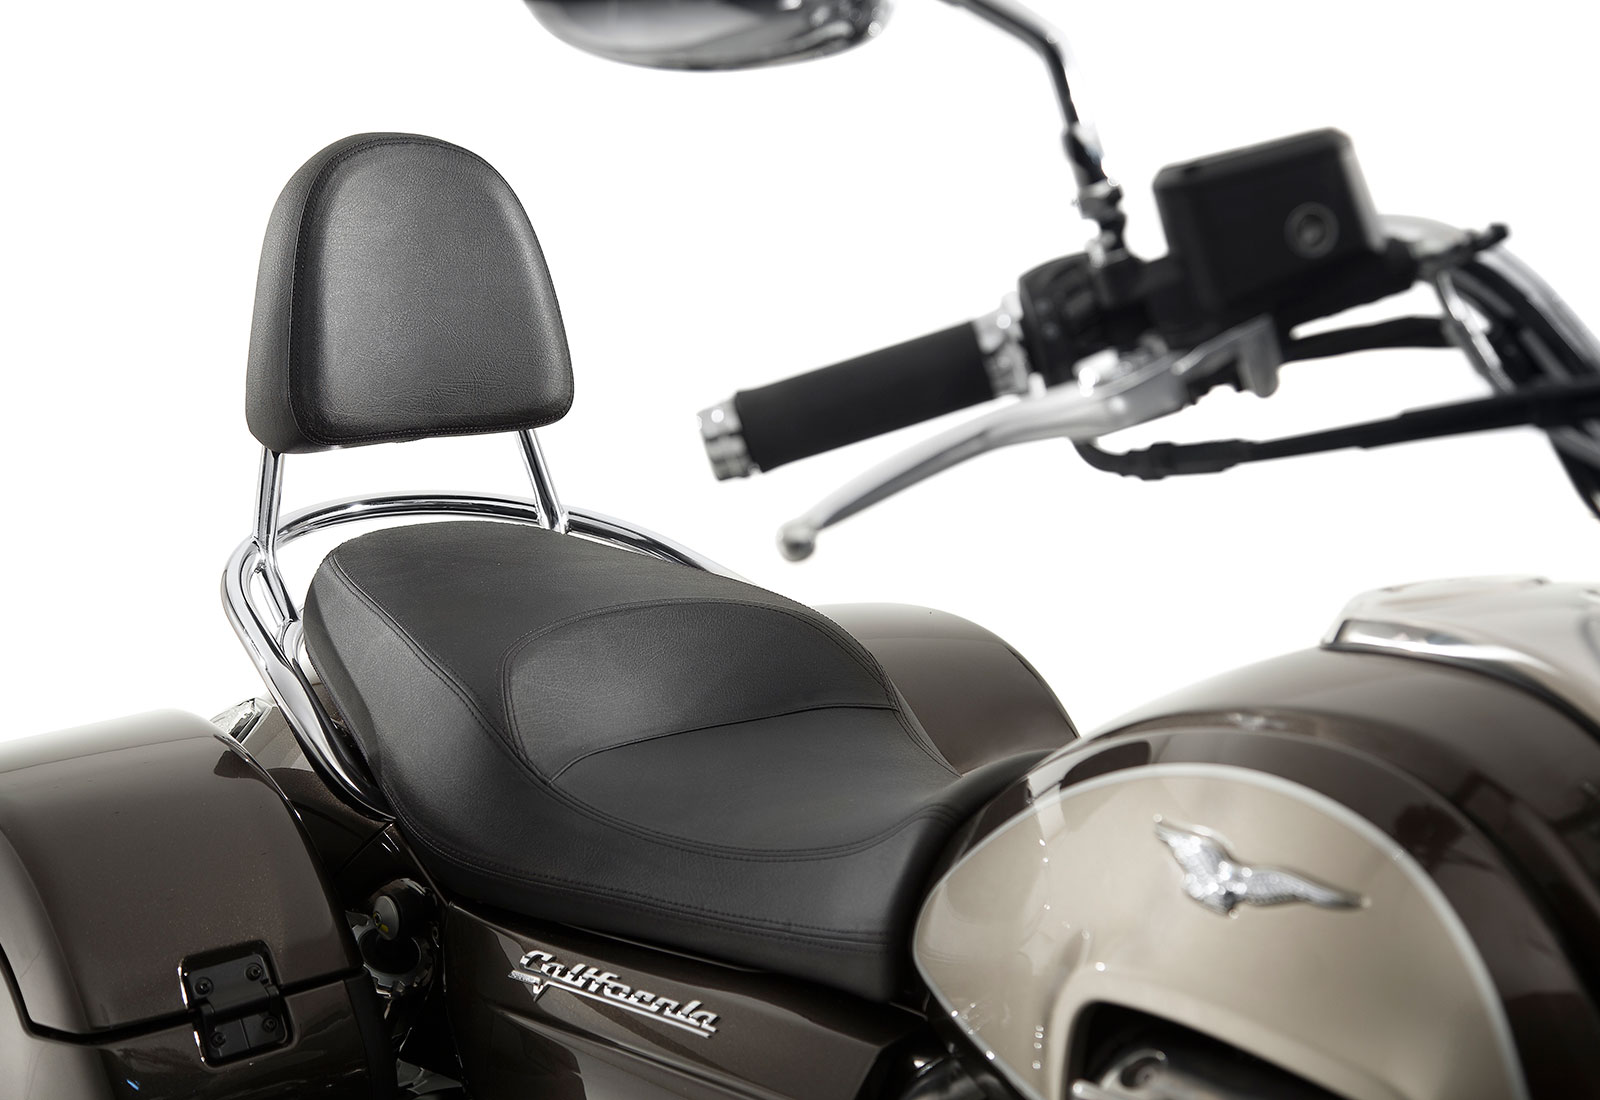 Moto Guzzi California 1400 Touring SE seat view